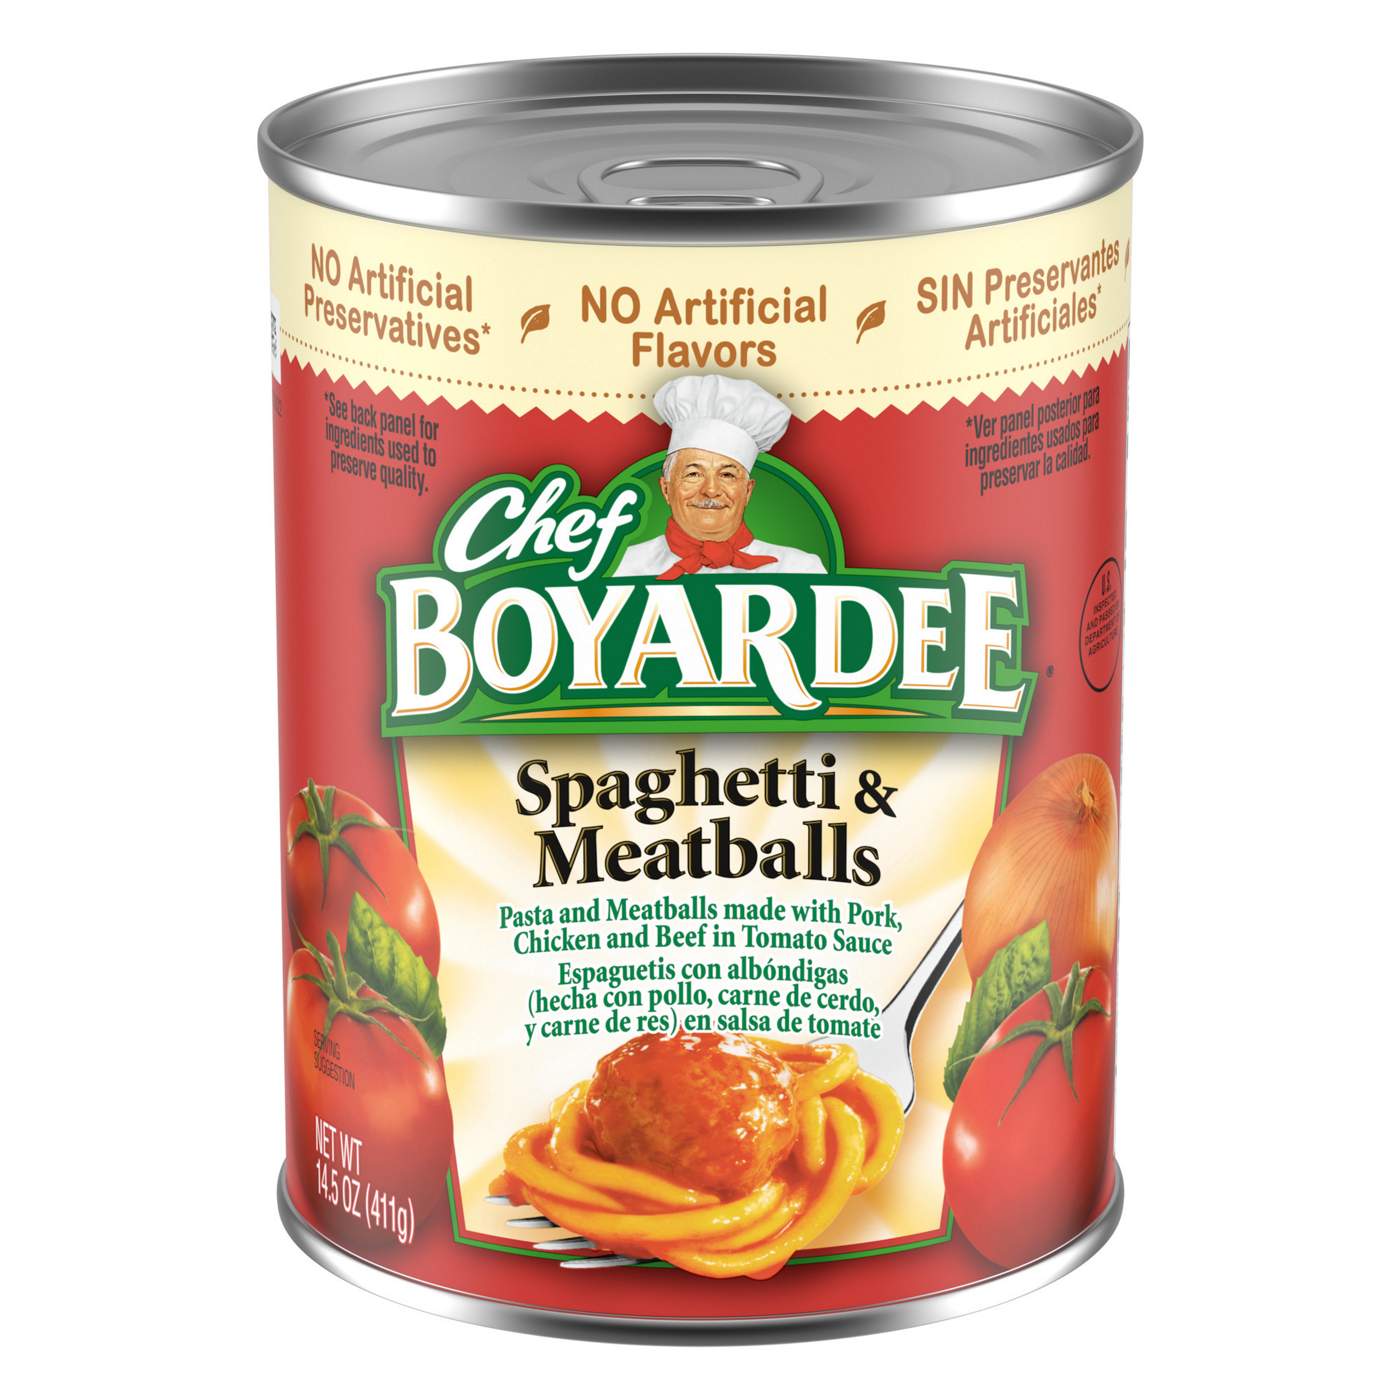 Chef Boyardee Spaghetti and Meatballs; image 1 of 7